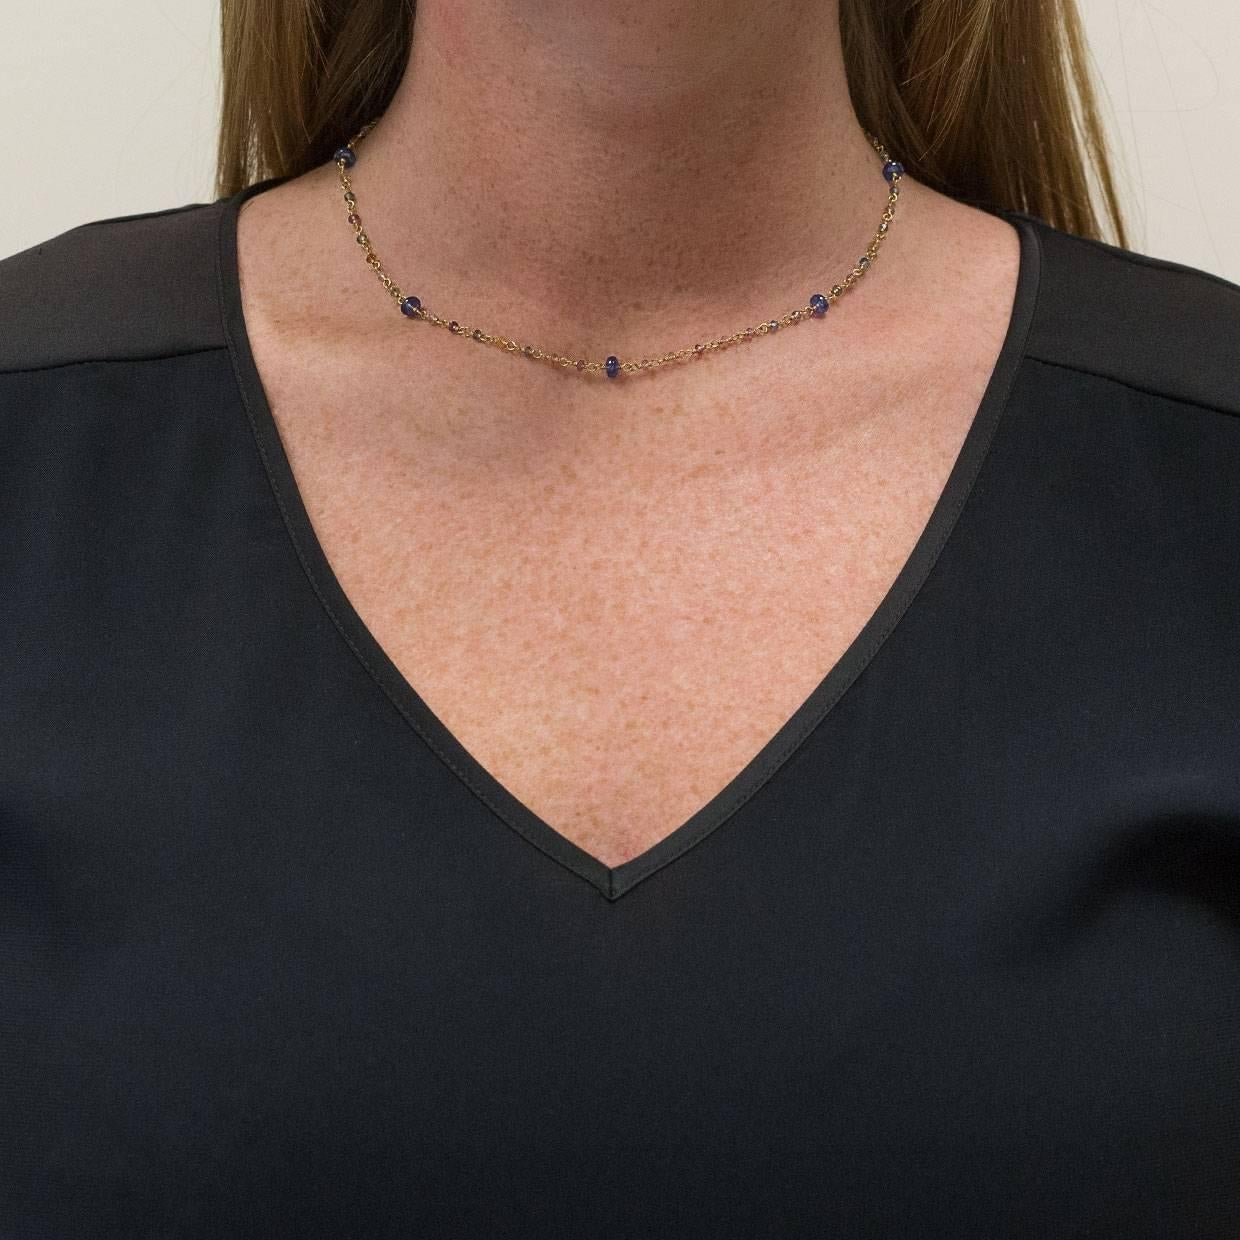 mallary marks necklace